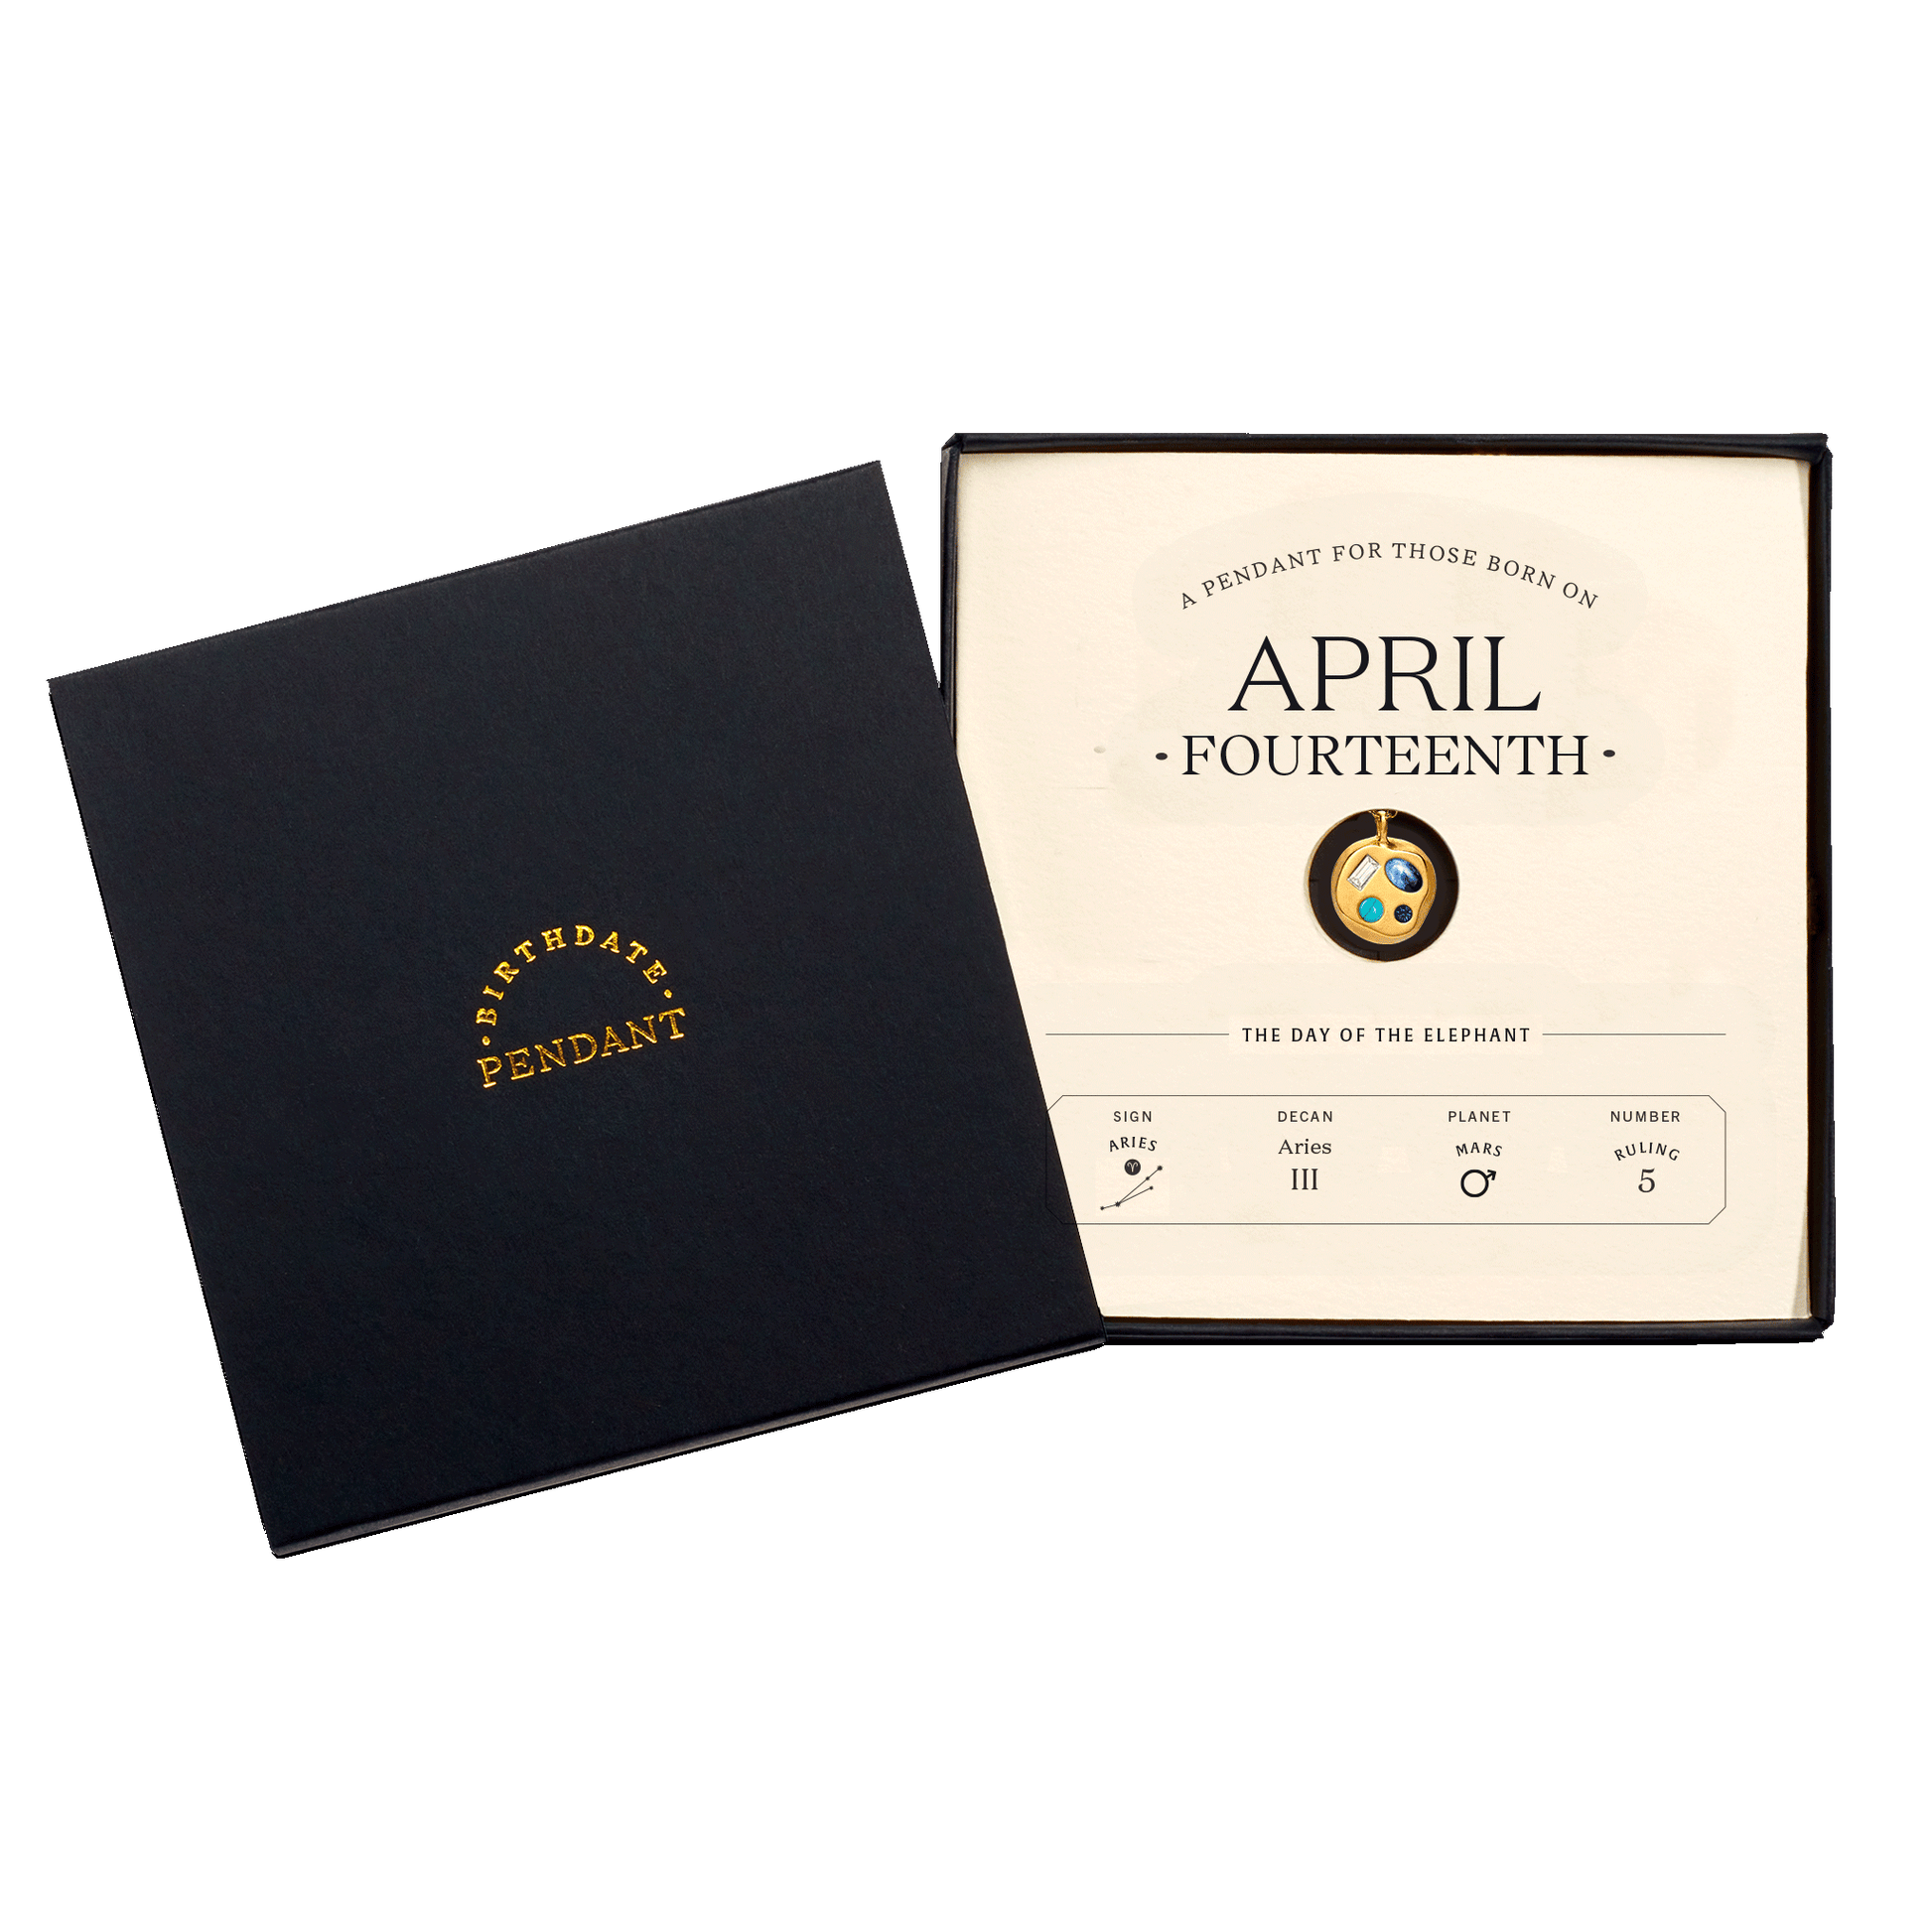 The April Fourteenth Pendant inside its box